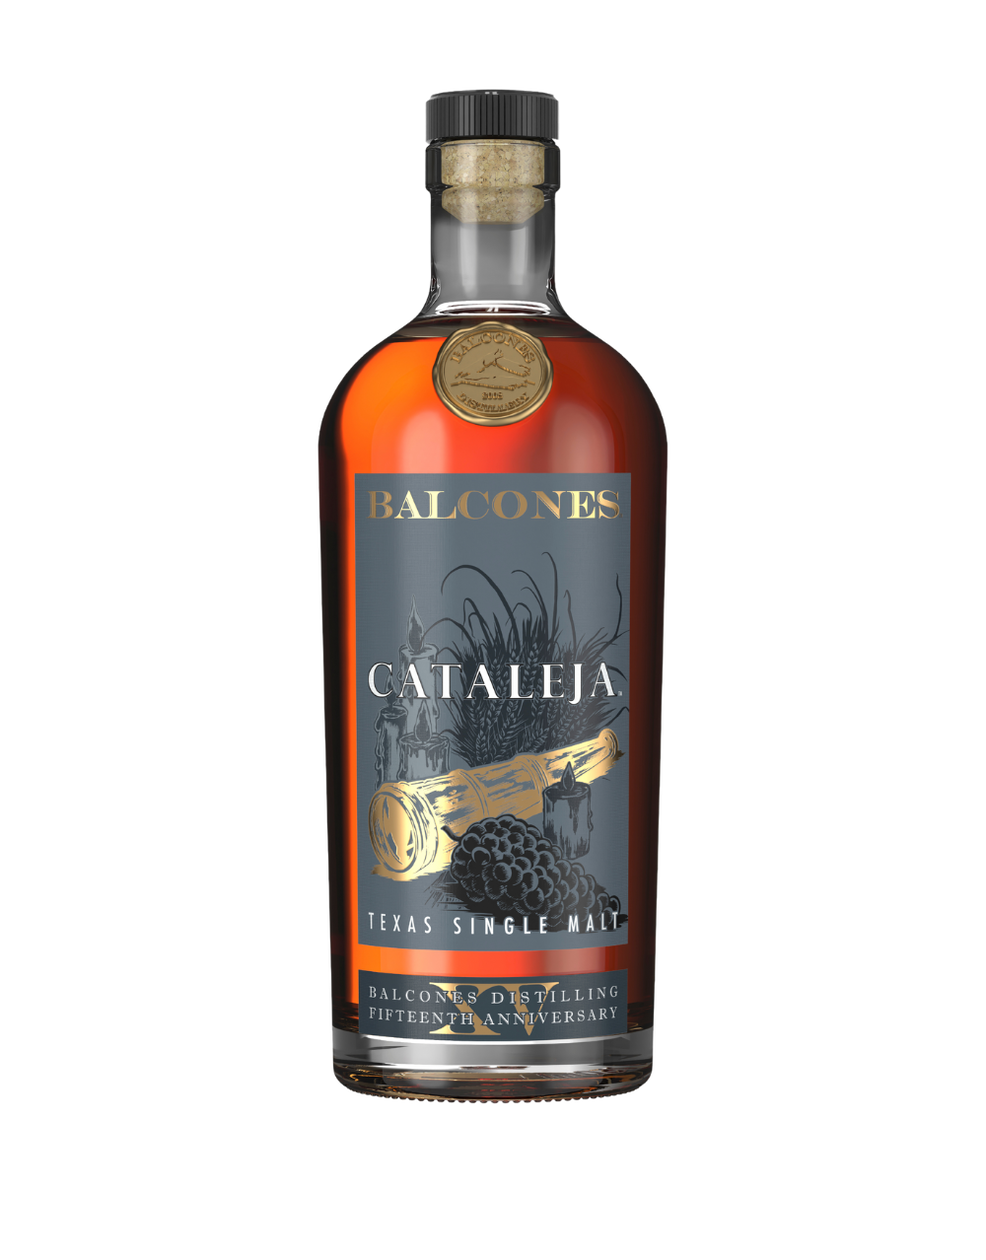 Balcones Cataleja Texas Single Malt Whiskey